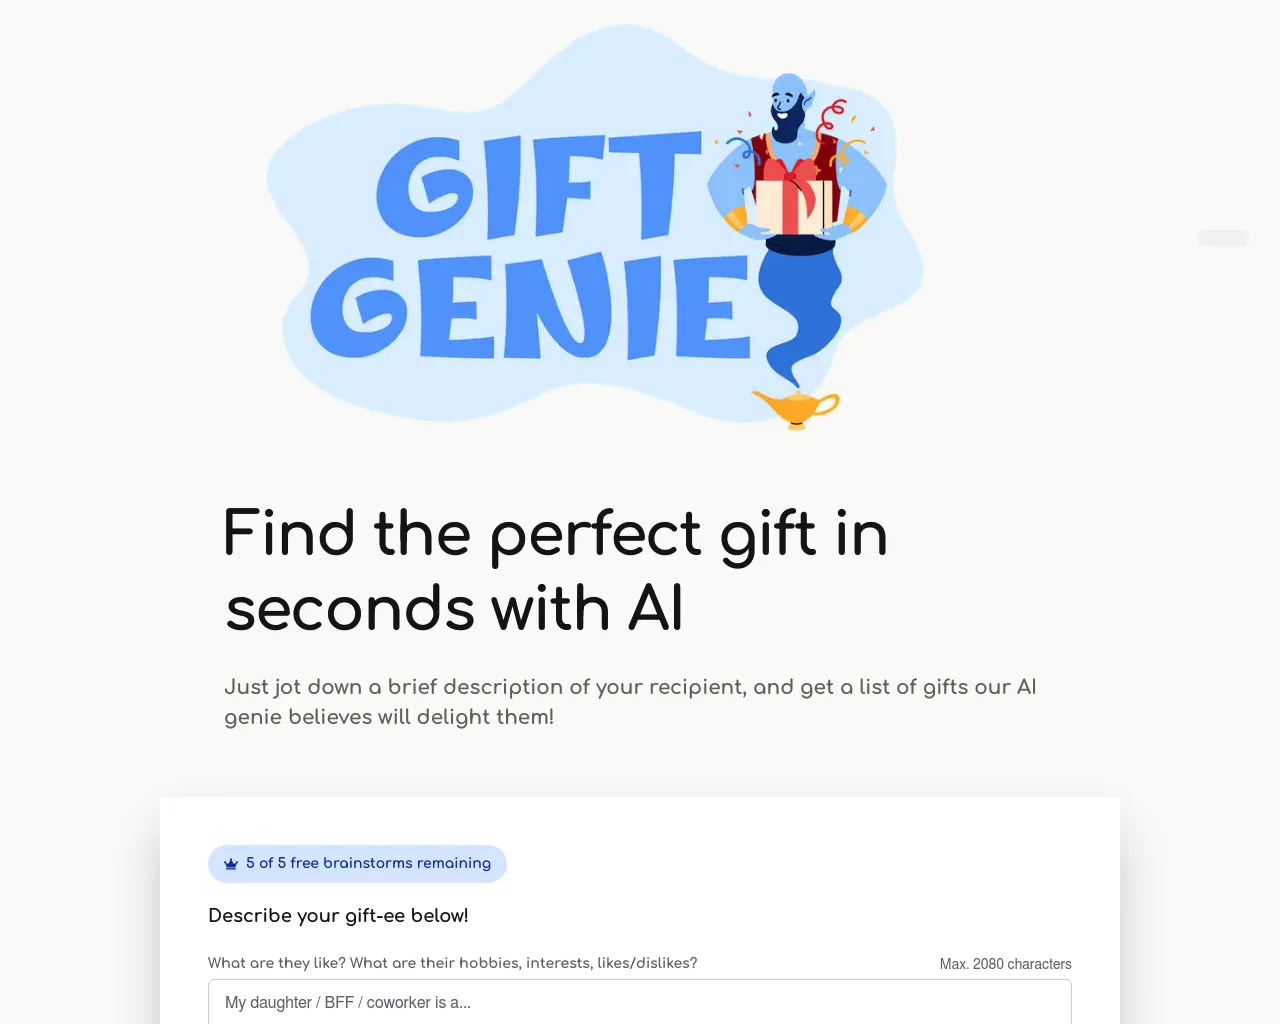 Gift Genie AI - Free Personalized Gift Ideas for Christmas, Birthdays, Holidays, Etc!